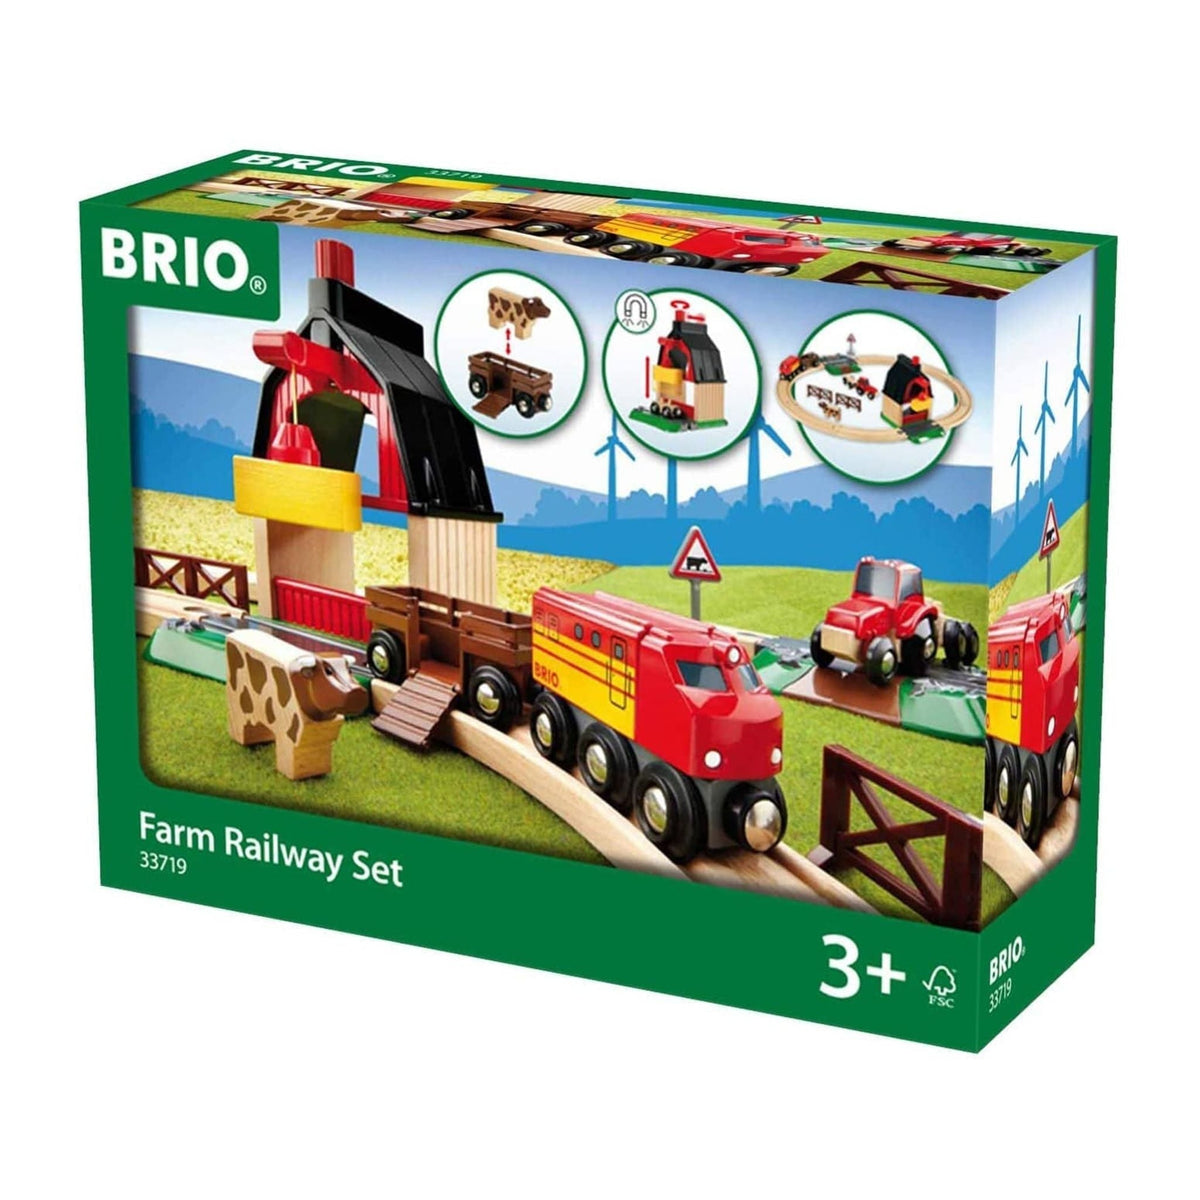 BRIO Set - Farm Railway Set 20 pieces - Toybox Tales